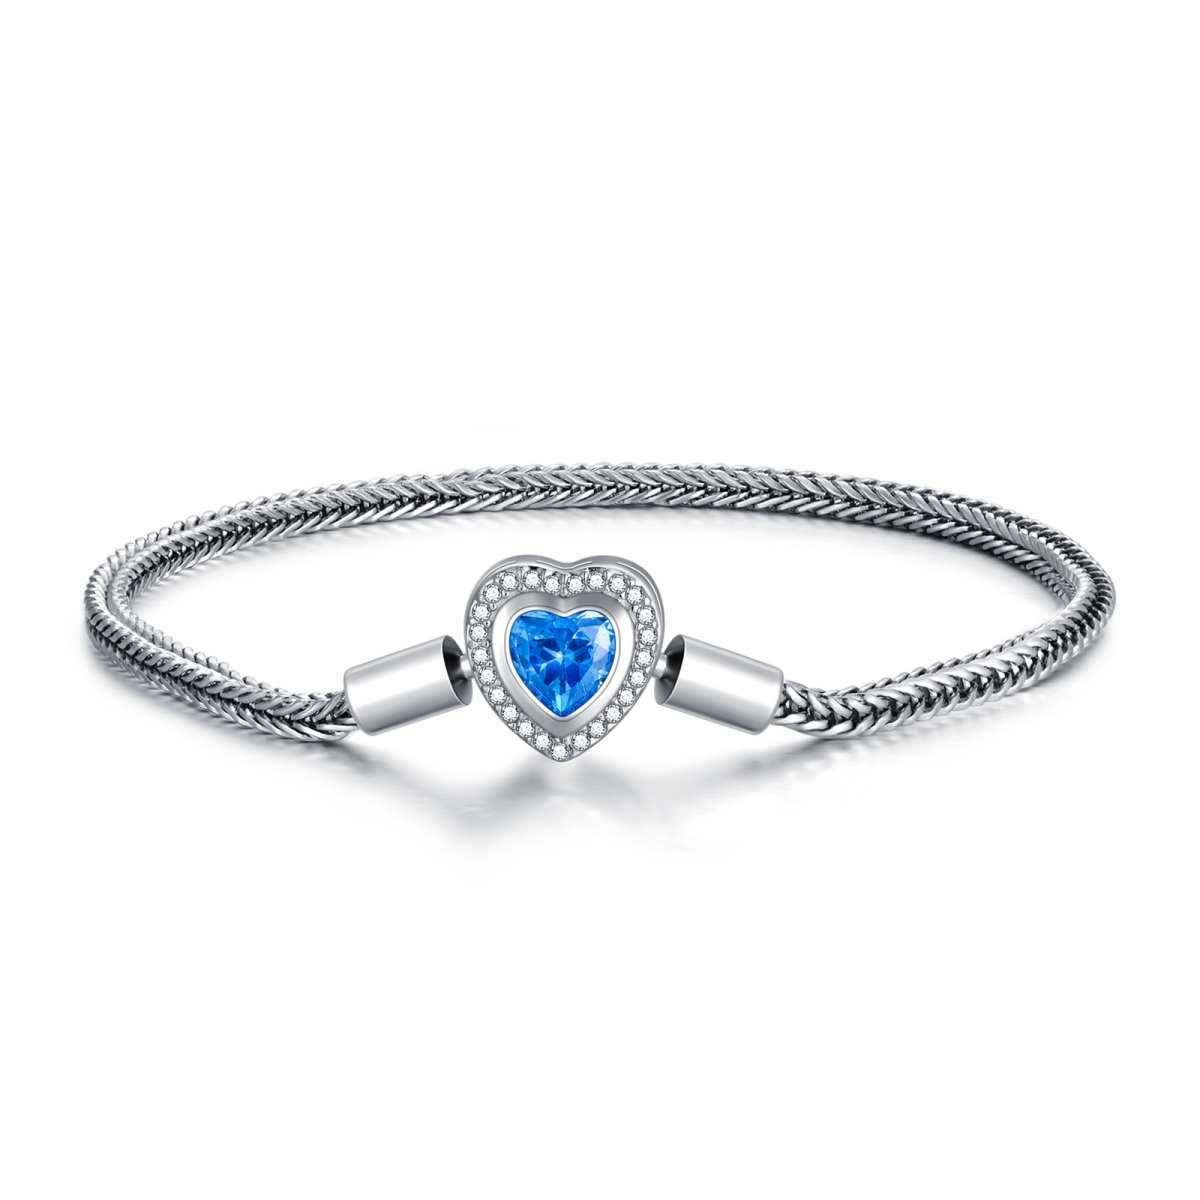 Bracelet en argent sterling avec pendentif en forme de coeur en cristal-1